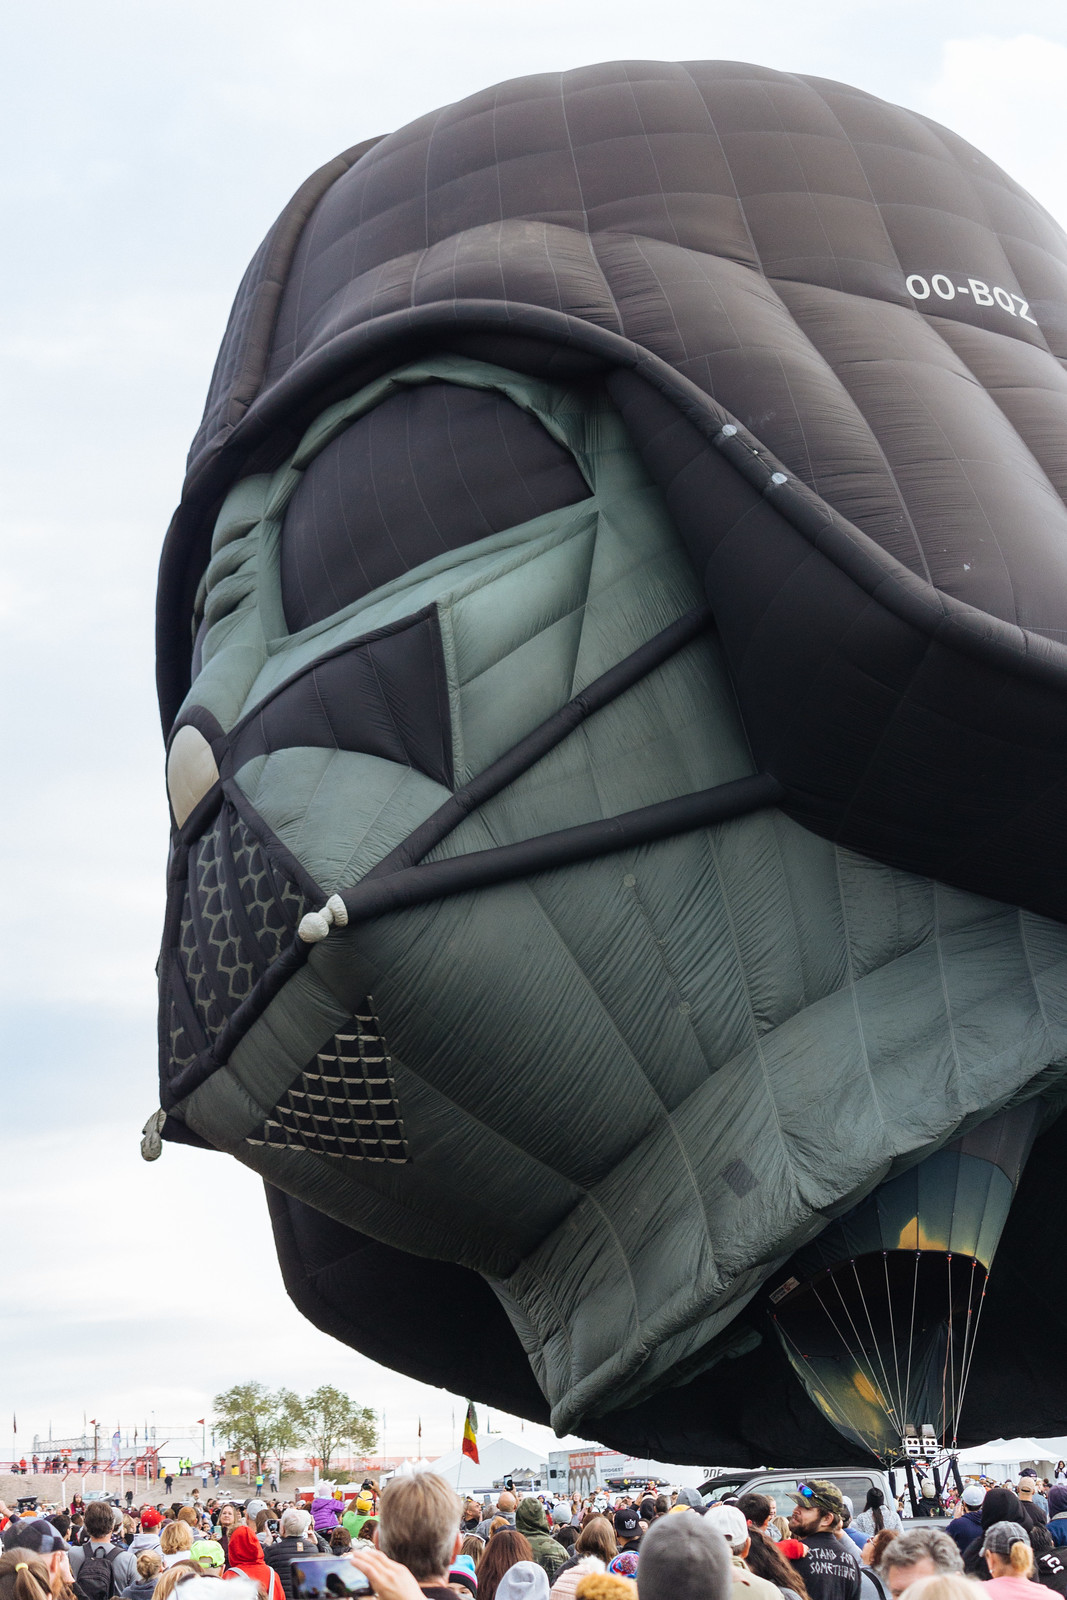 Darth Vader helmet balloon at the Albuquerque International Balloon Fiesta